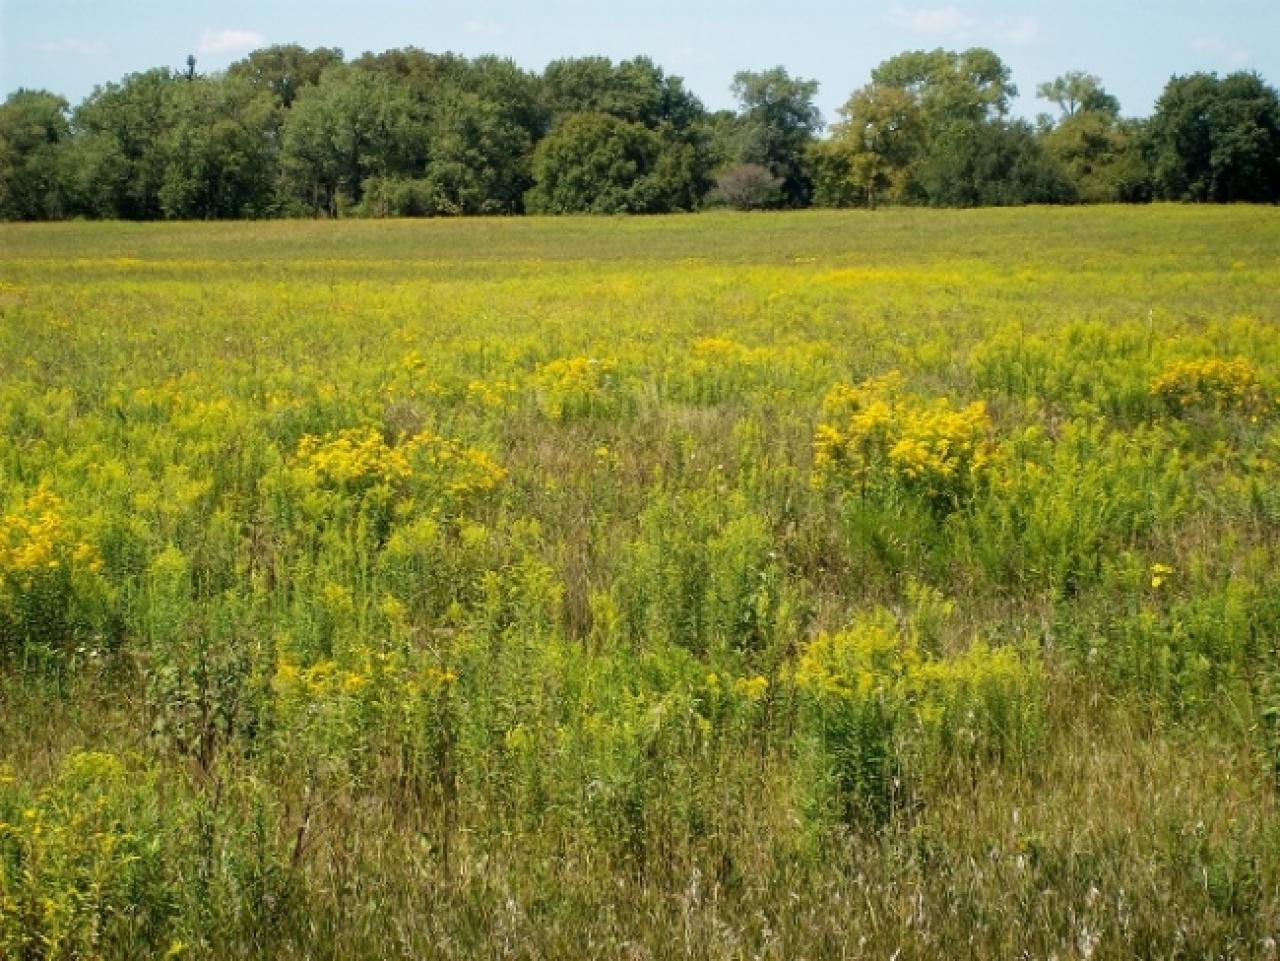 Perennial grasses for biofuels